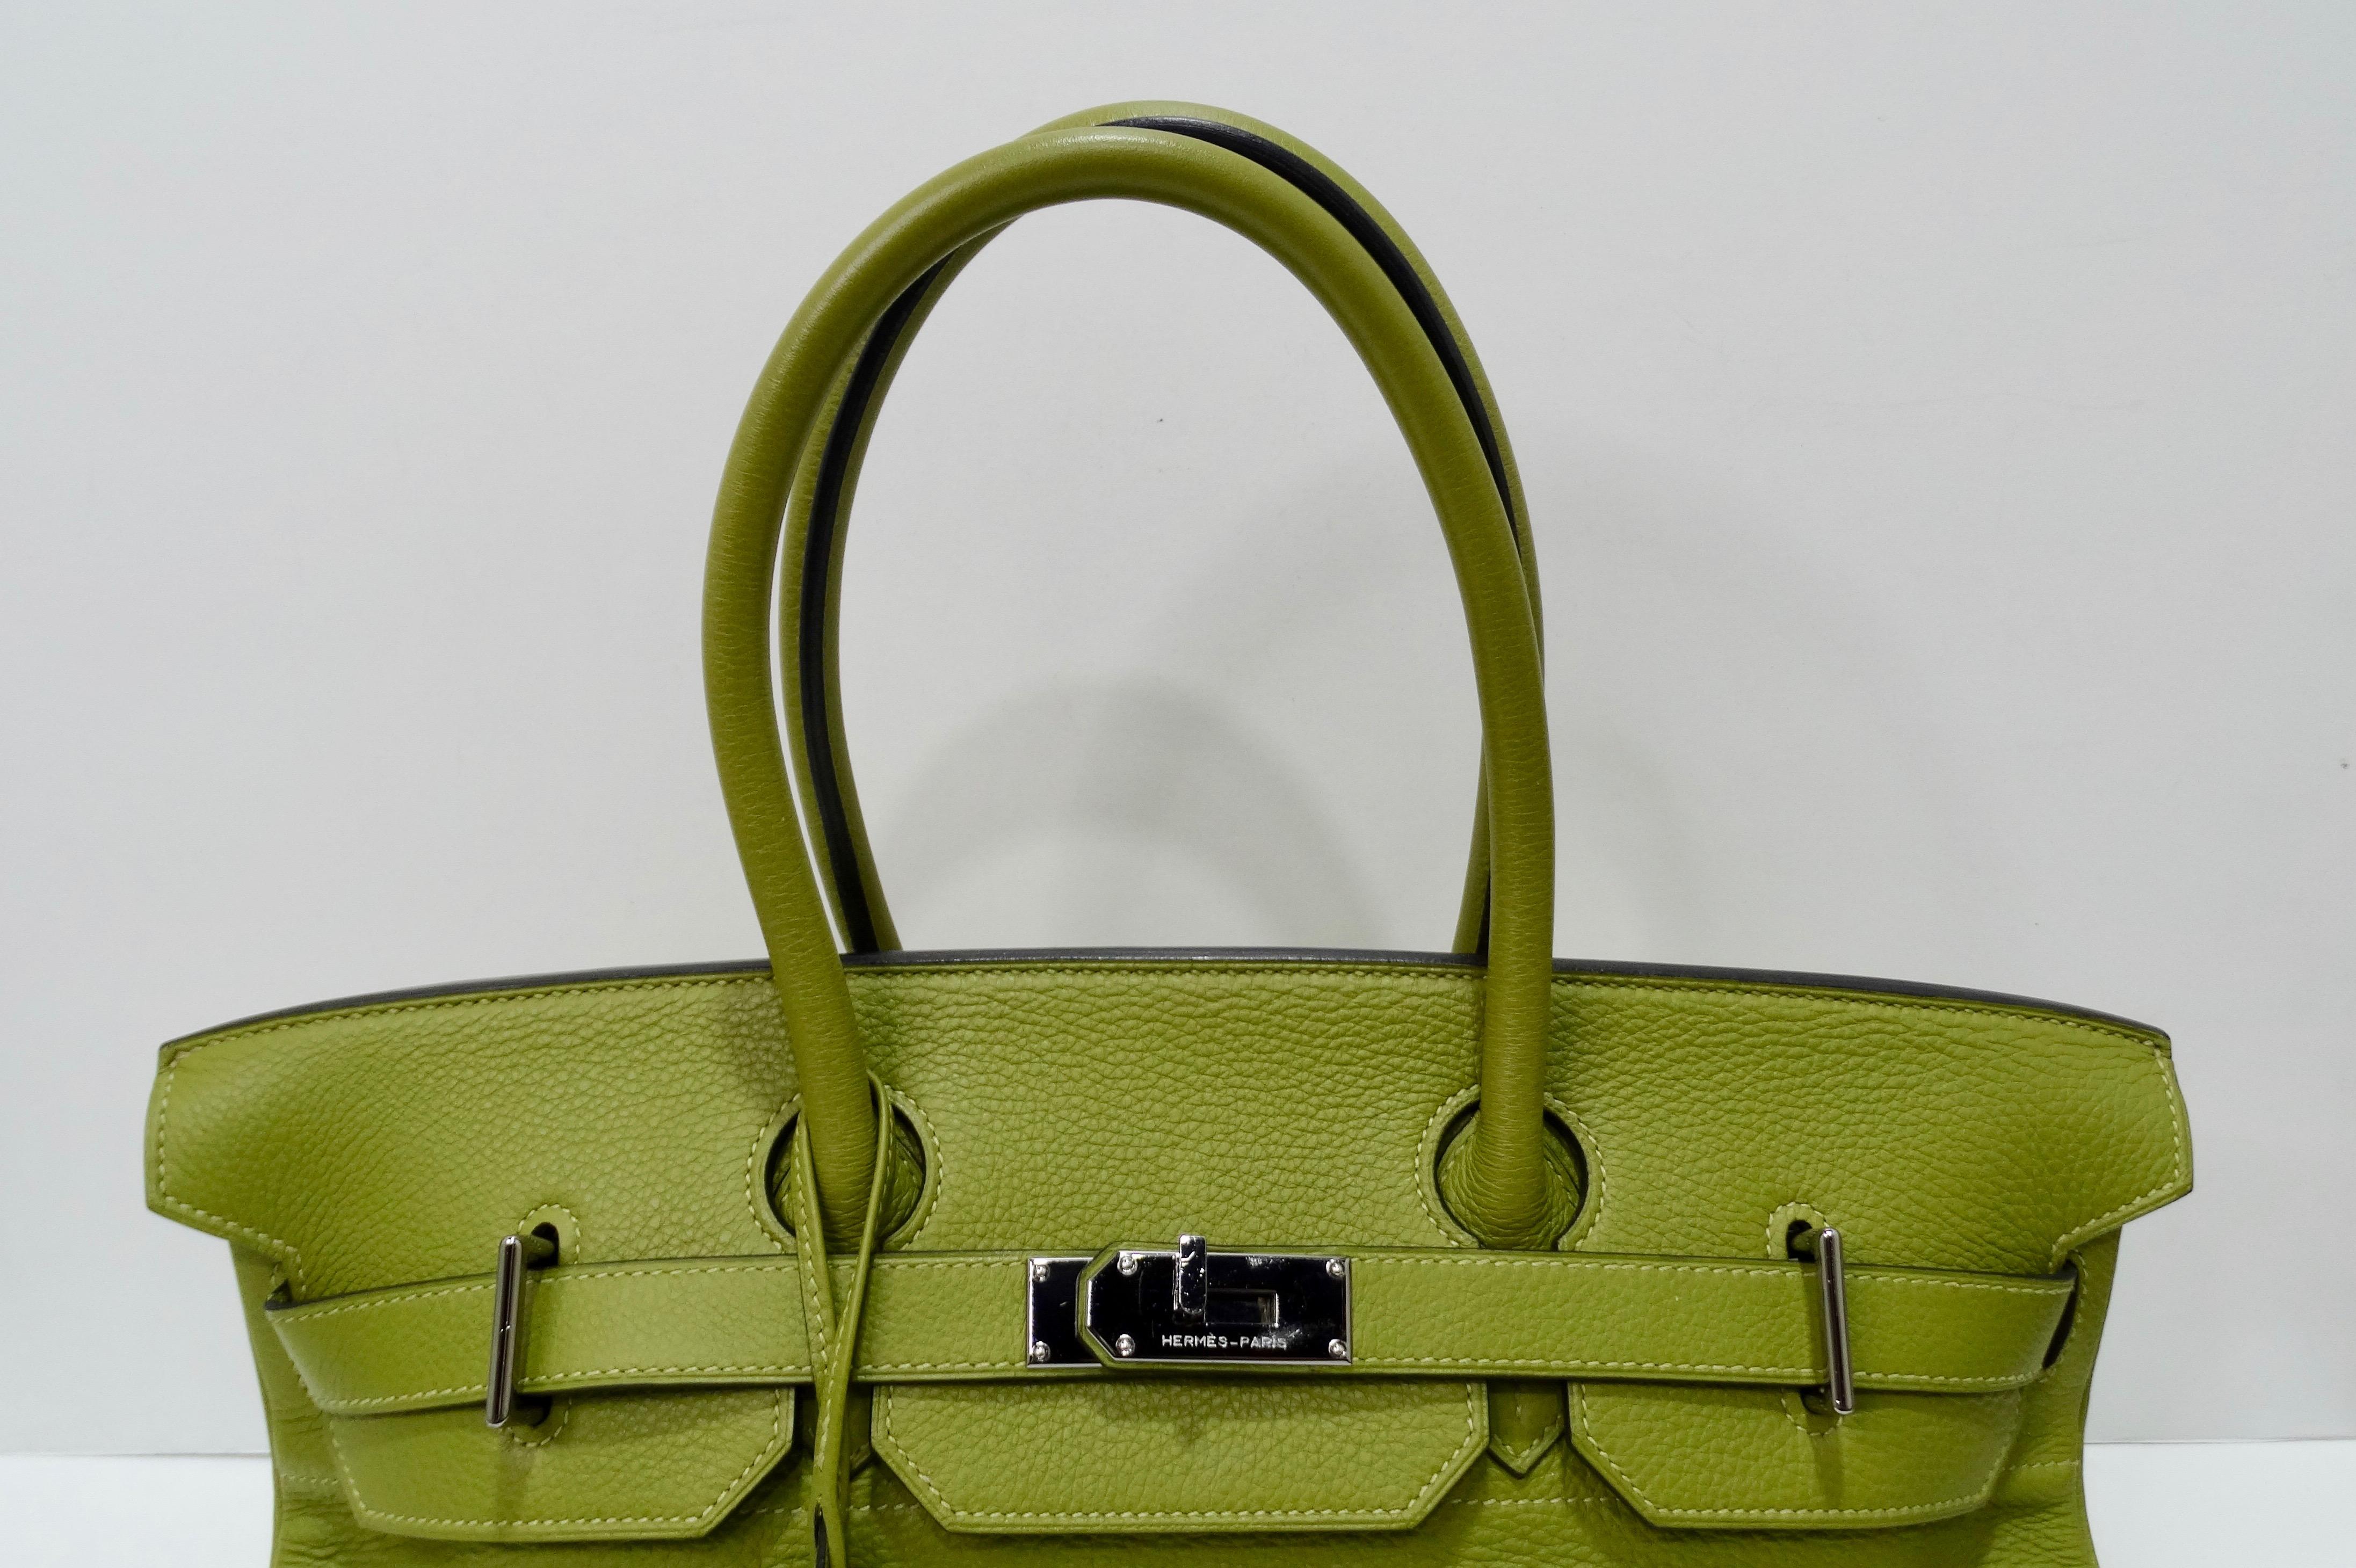 Hermès - Sac Birkin 42cm vert chartreuse Clémence JPG, porté épaule  11